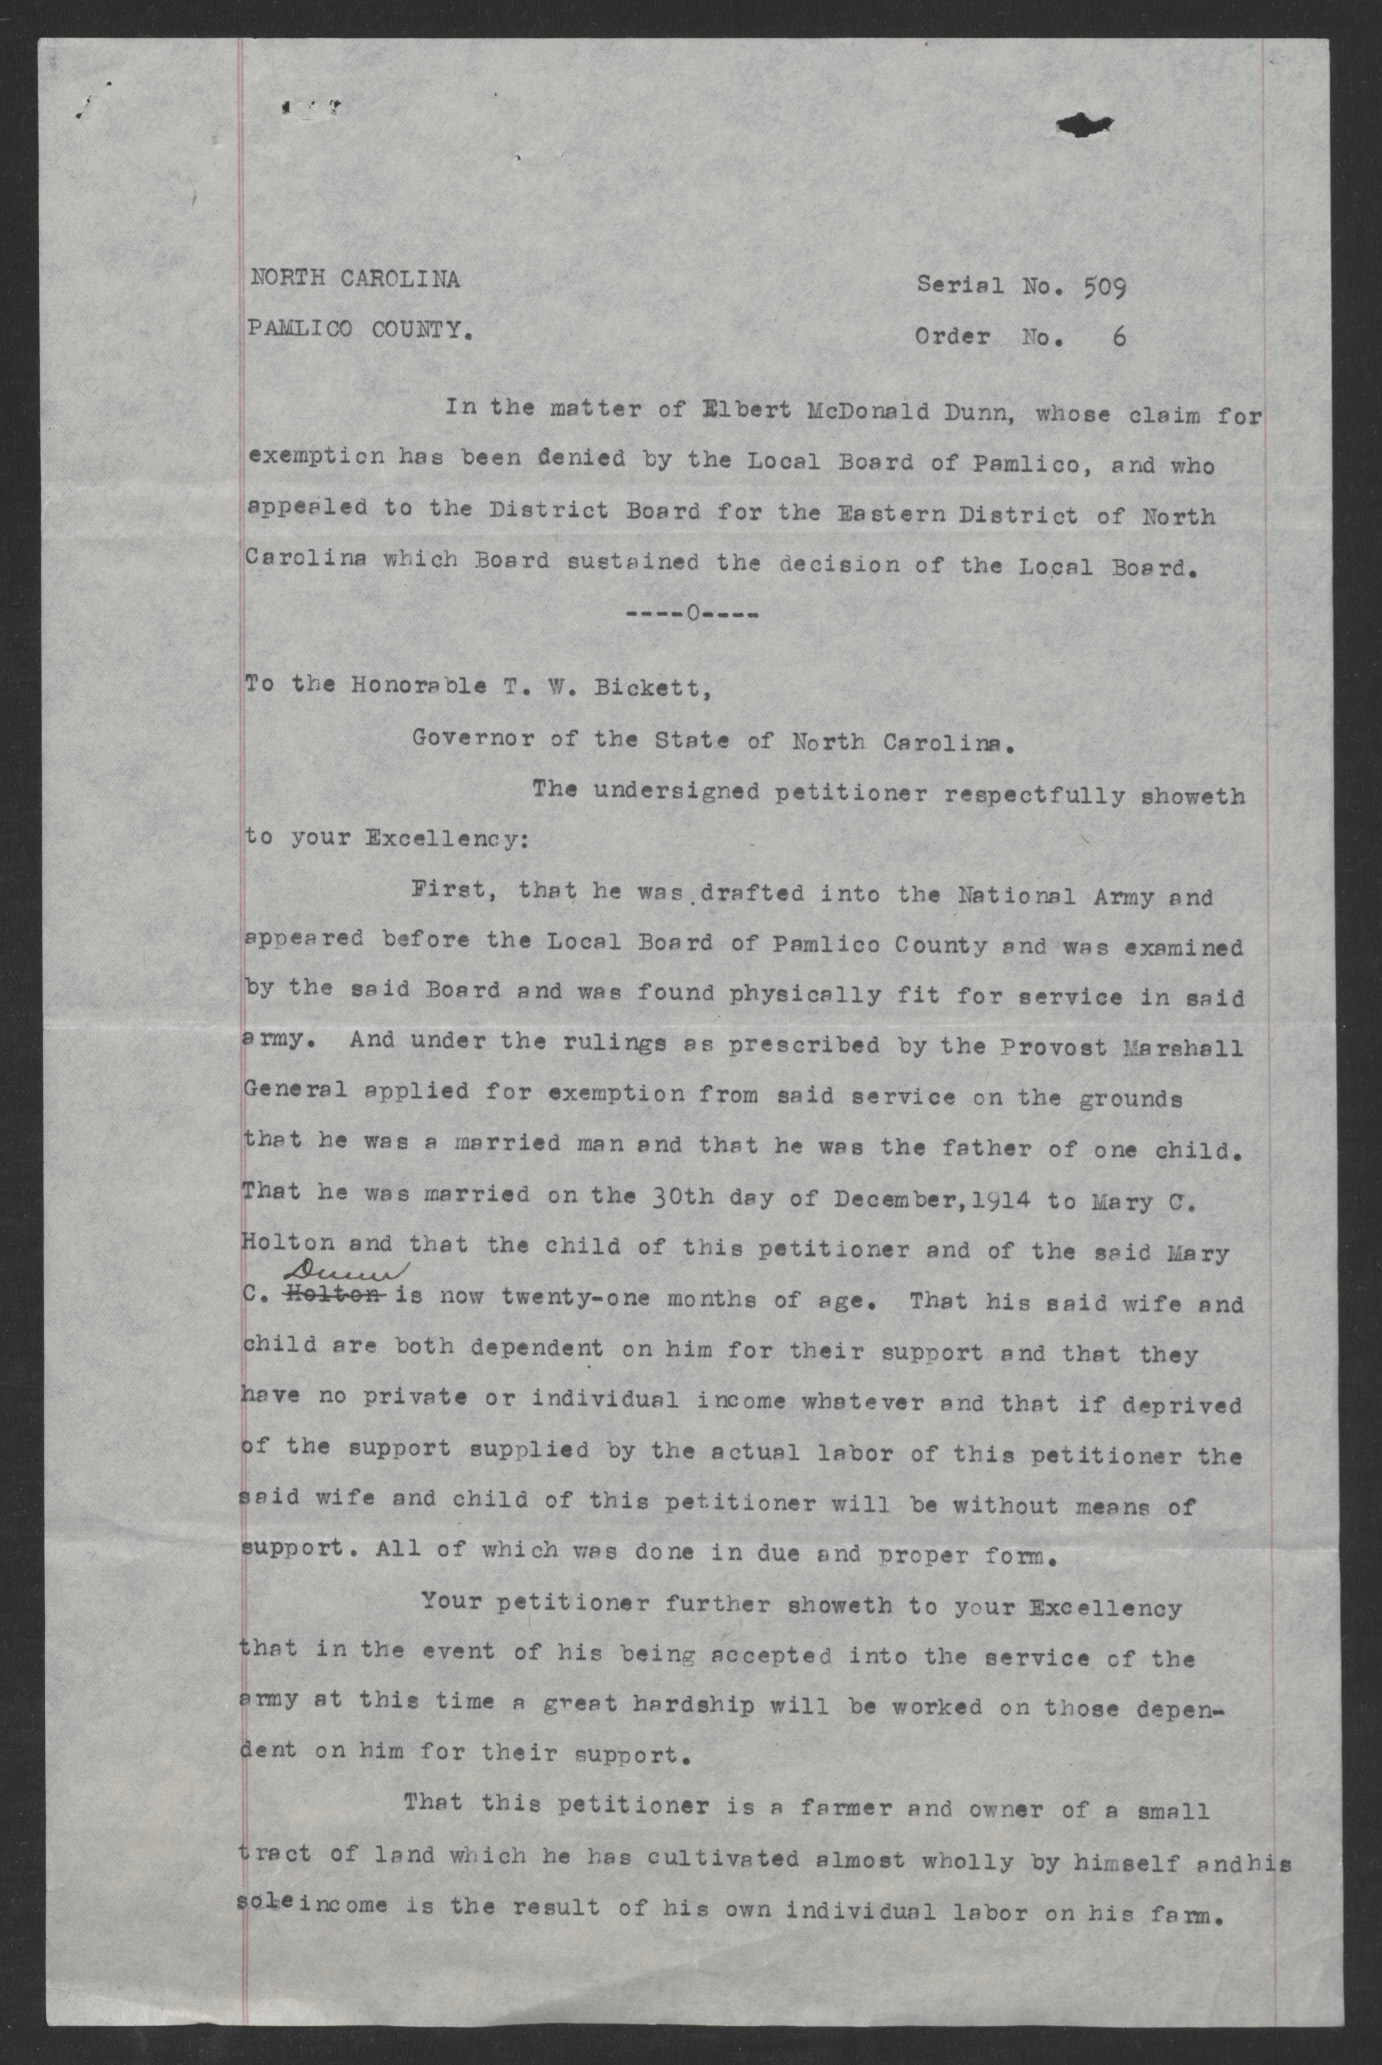 Affidavit of Elbert M. Dunn, September 21, 1917, page 1